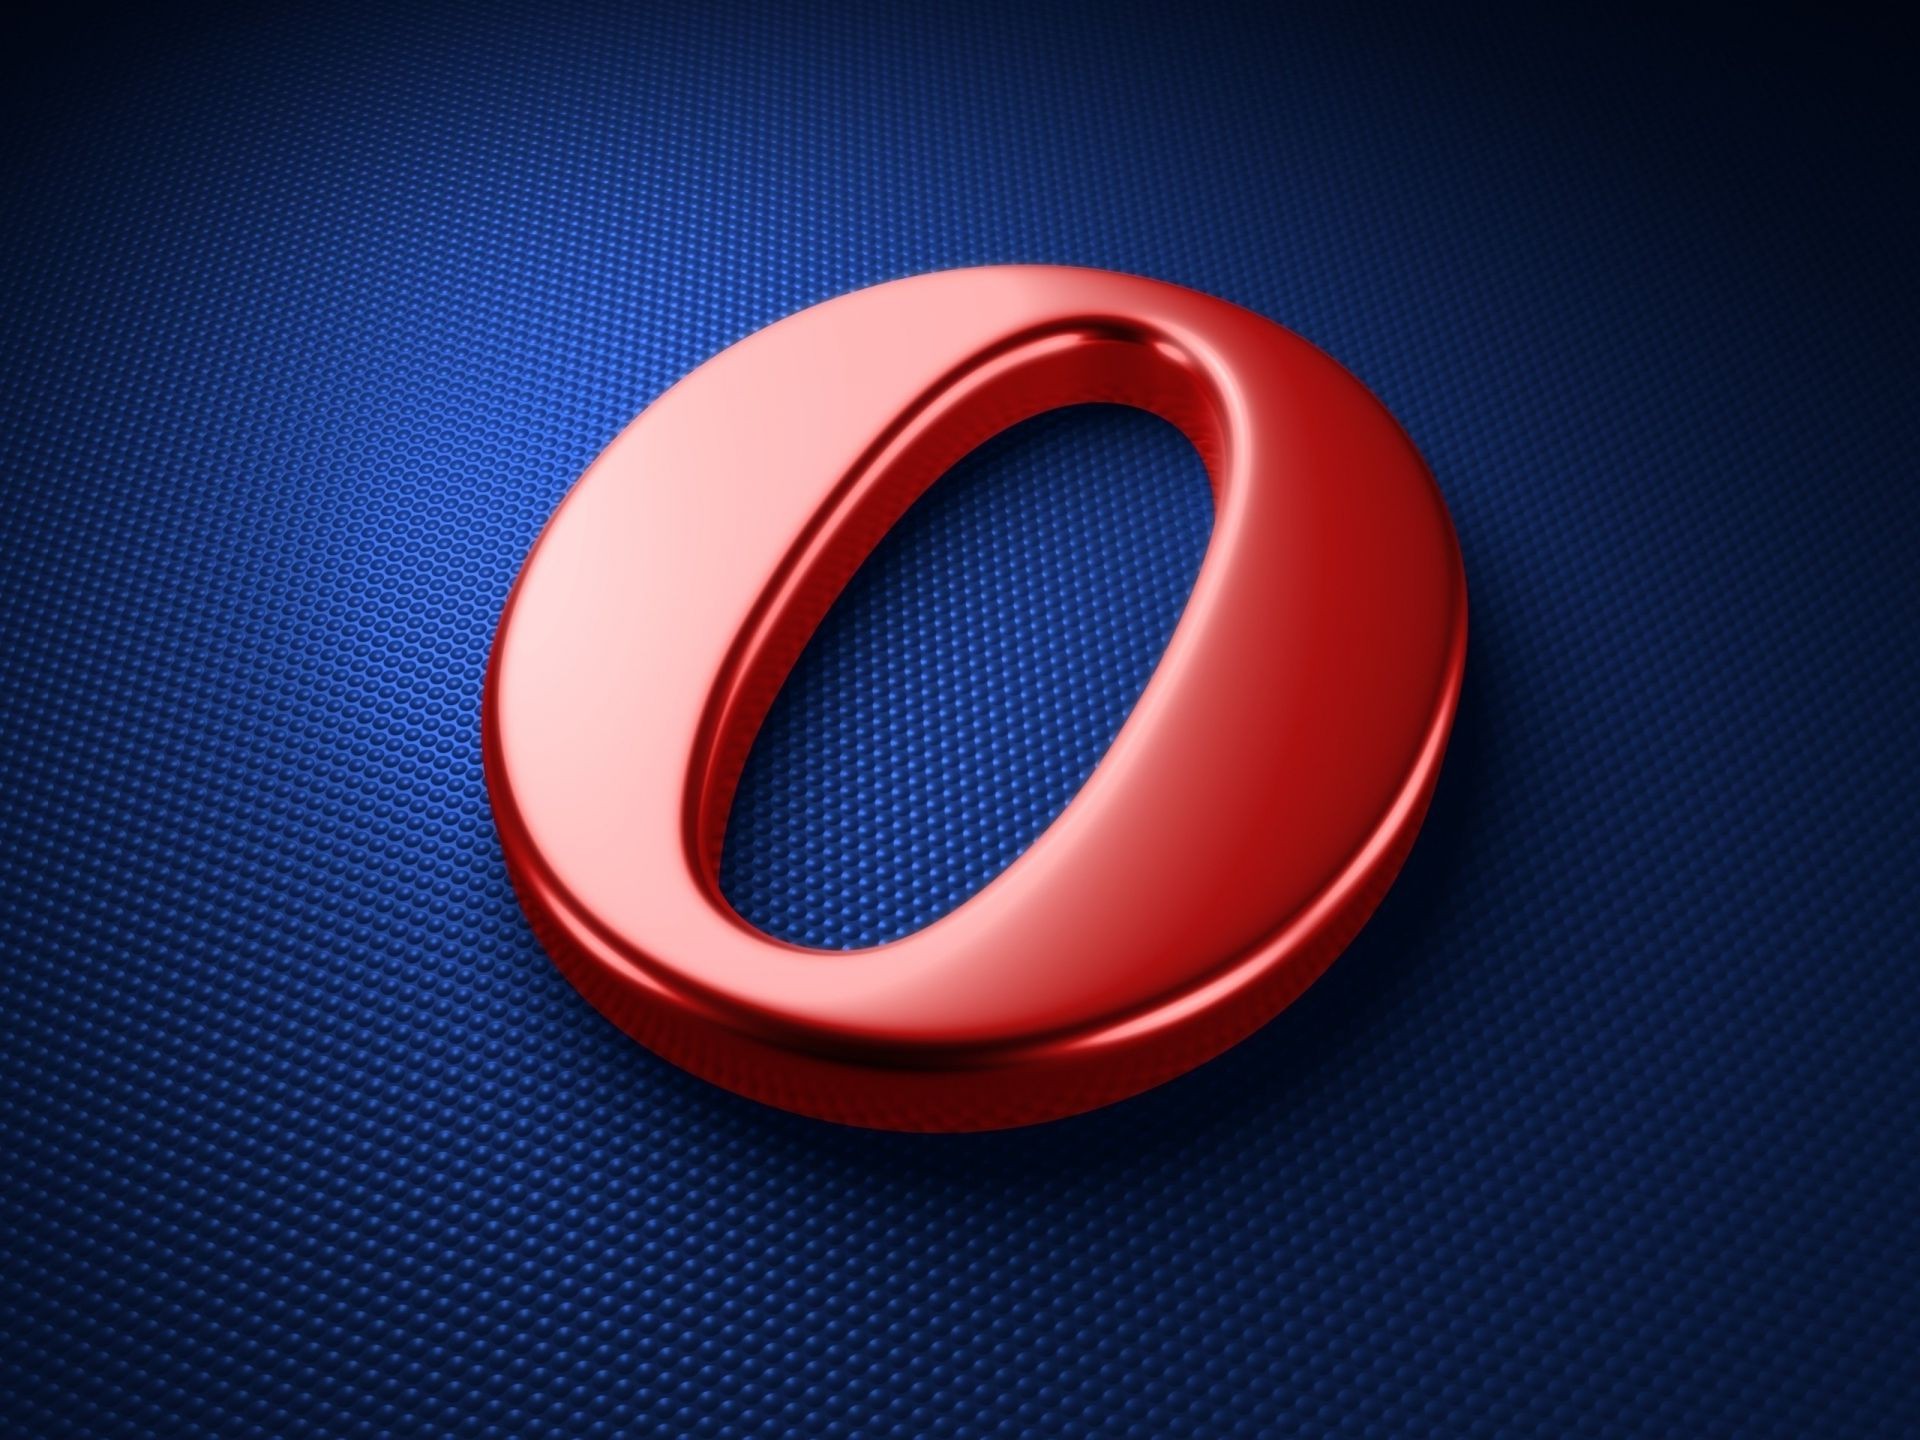 opera desktop abstract shape design metallic symbol illustration